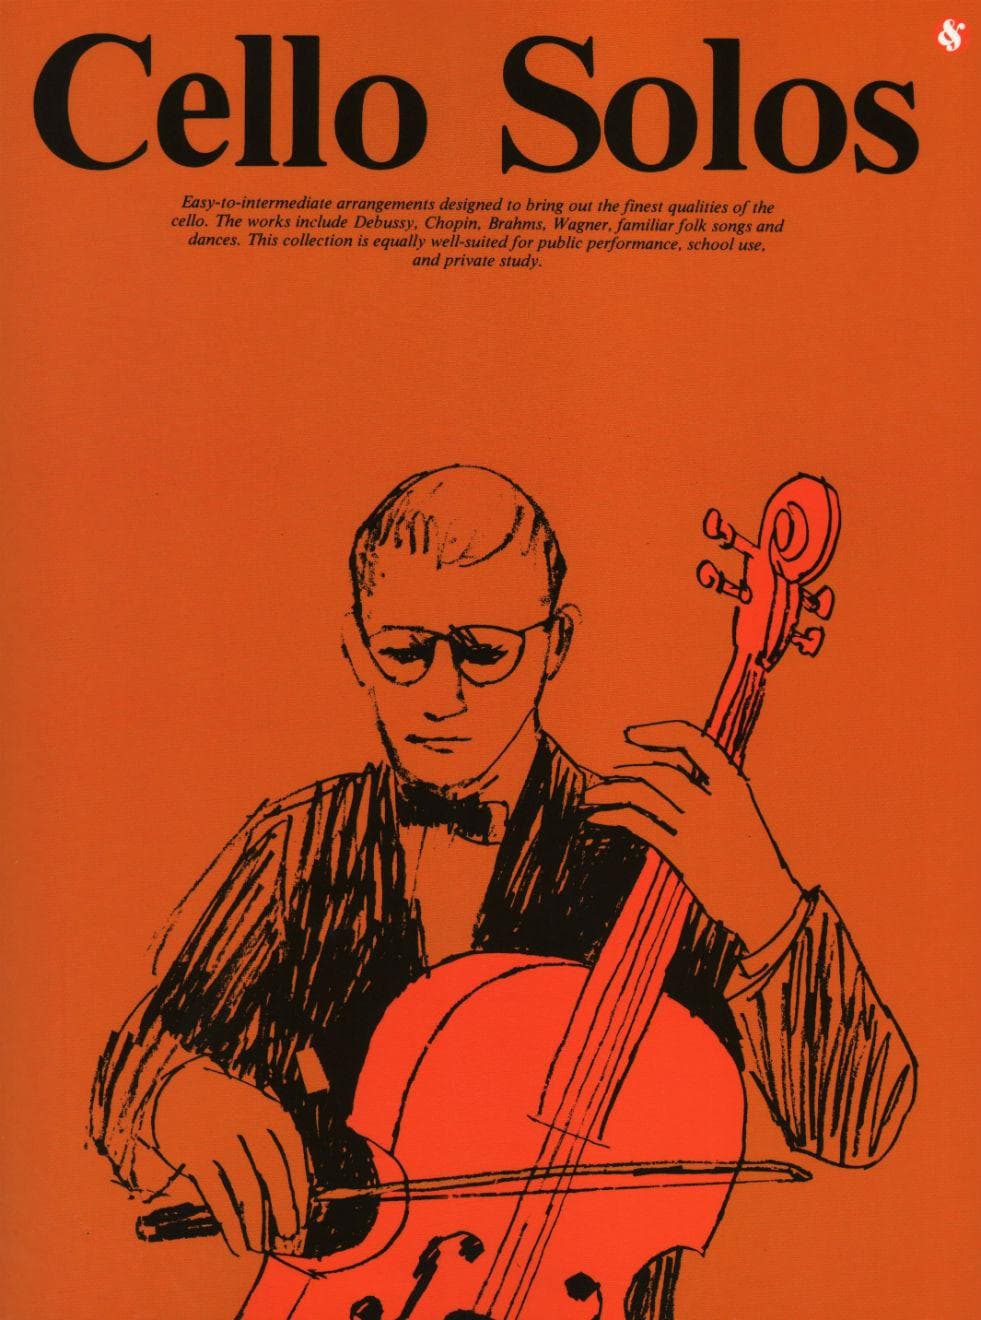 Arnold, J  - Everyone's Favorite Series: Cello Solos - Amsco Edition